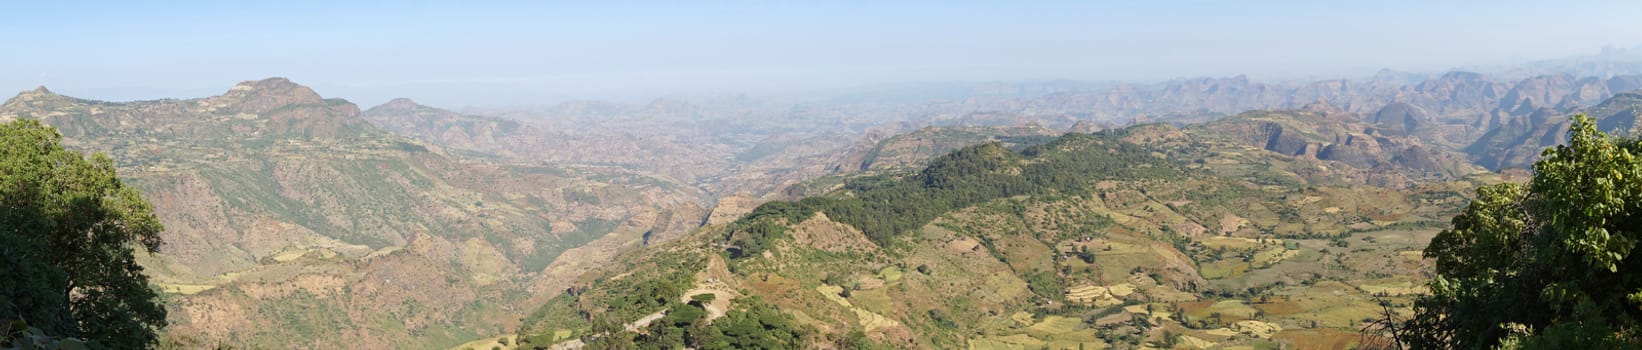 Landscape around the Wolkefit Pass, Ethiopia, Africa